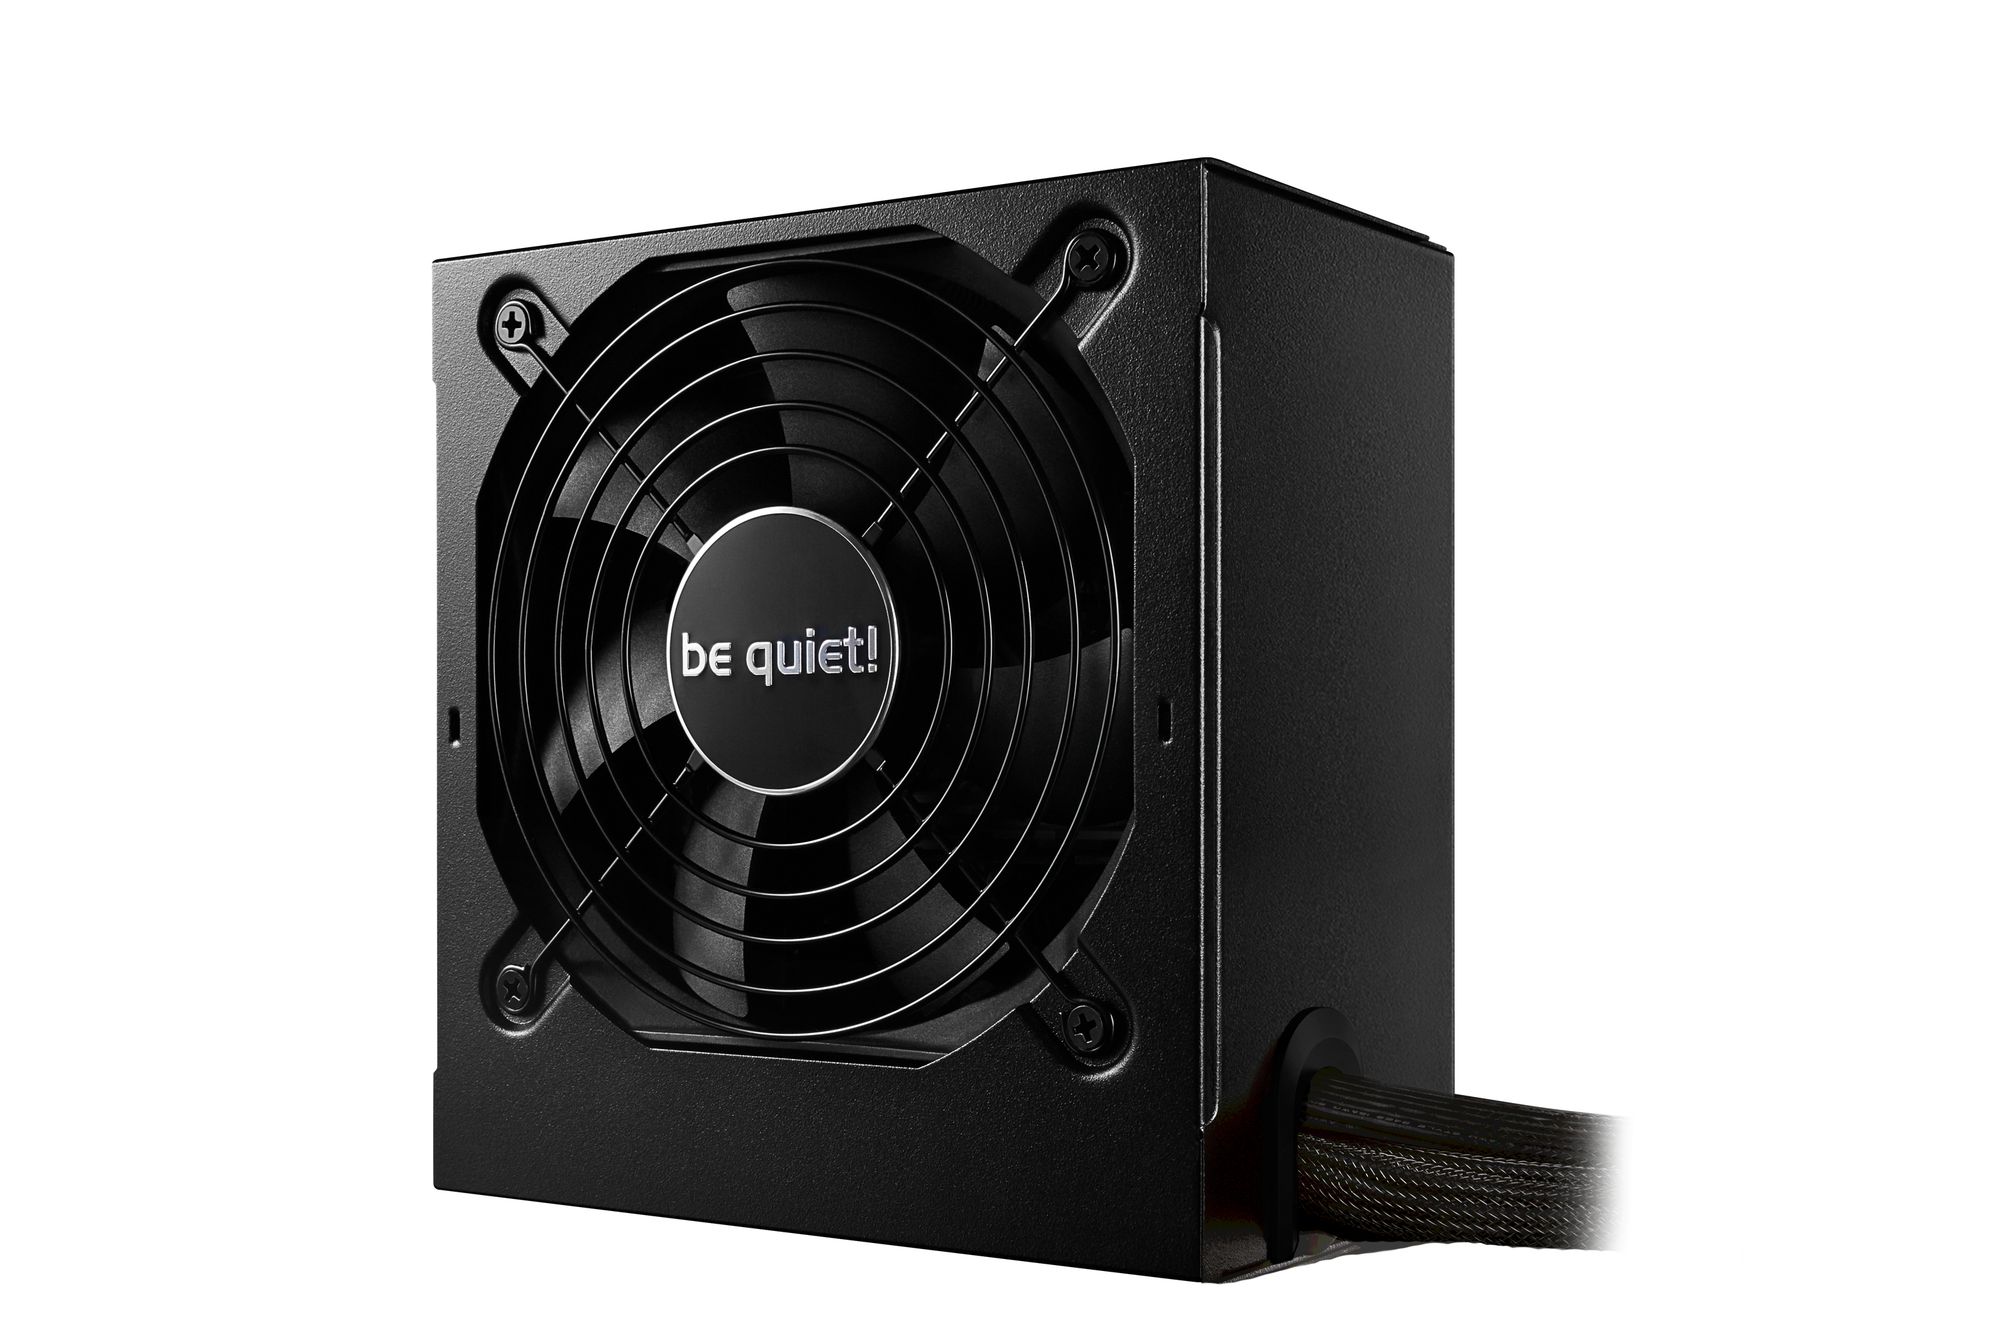 Блок питания be quiet! System Power 10 650W (BN328)